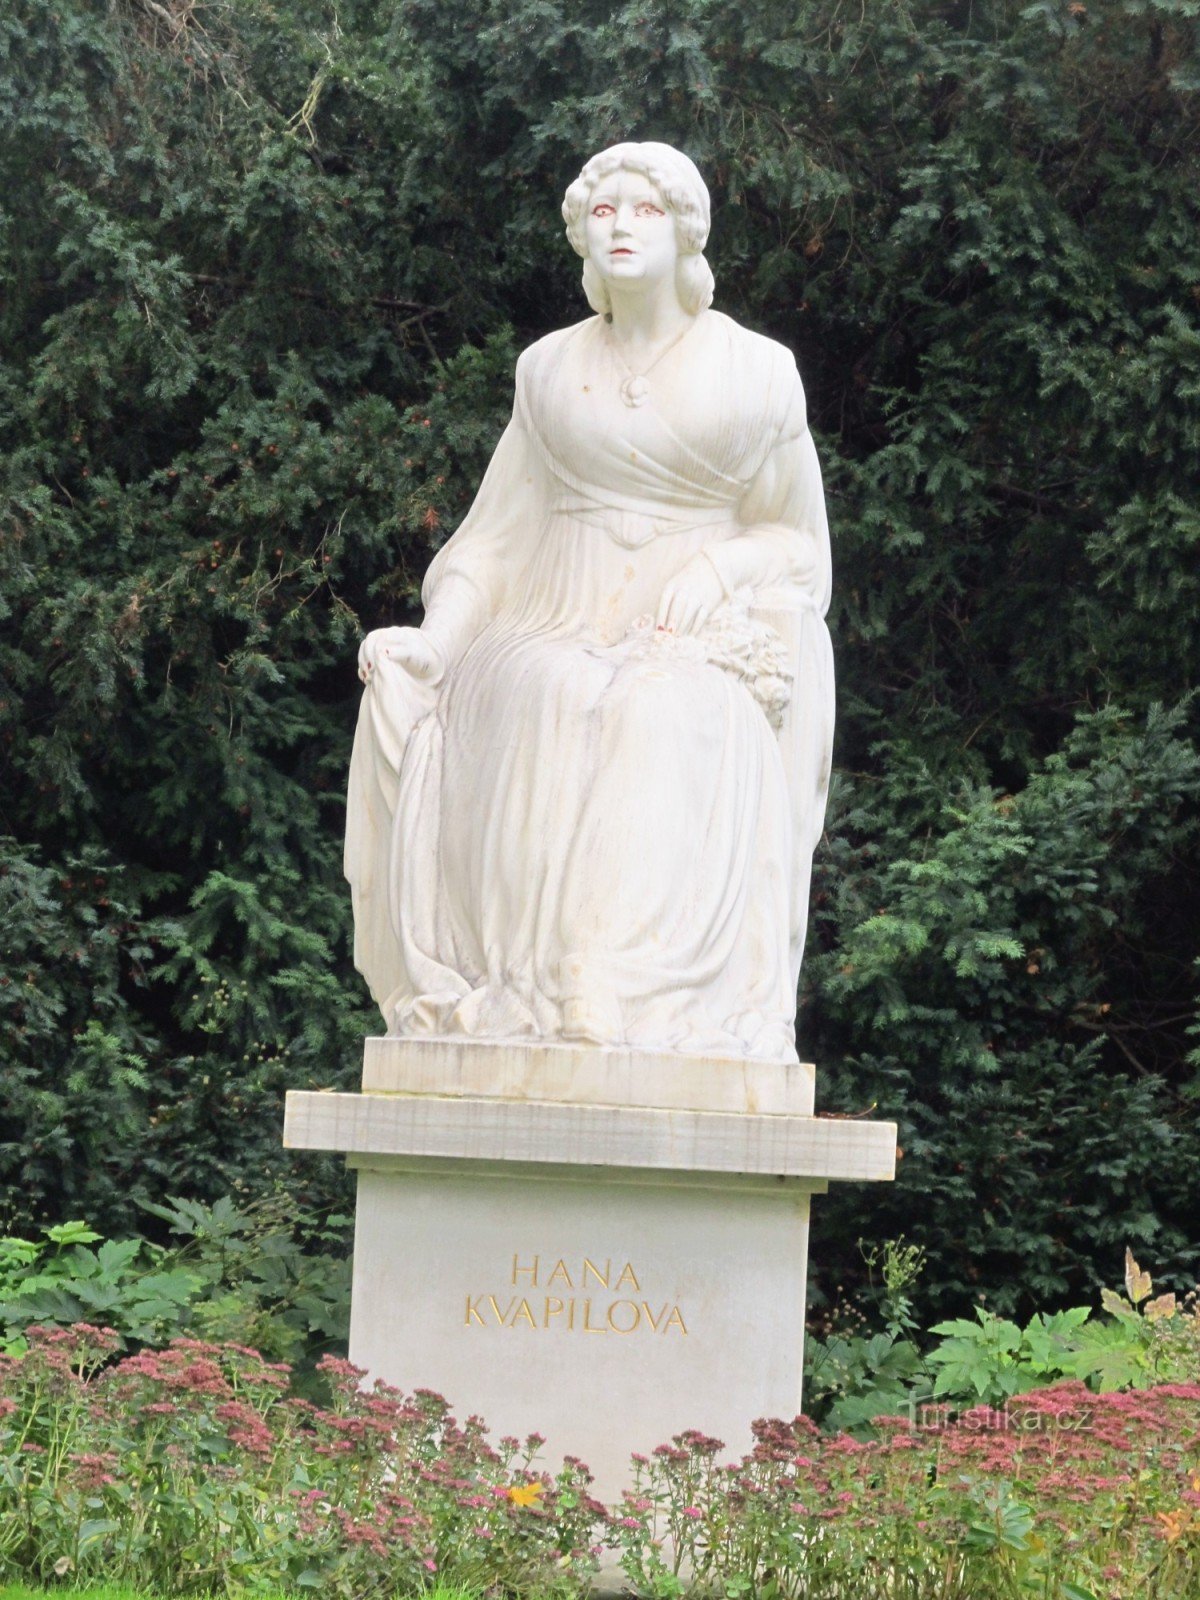 Hana Kvapilovás monument i Kinsky-trädgården i Prag